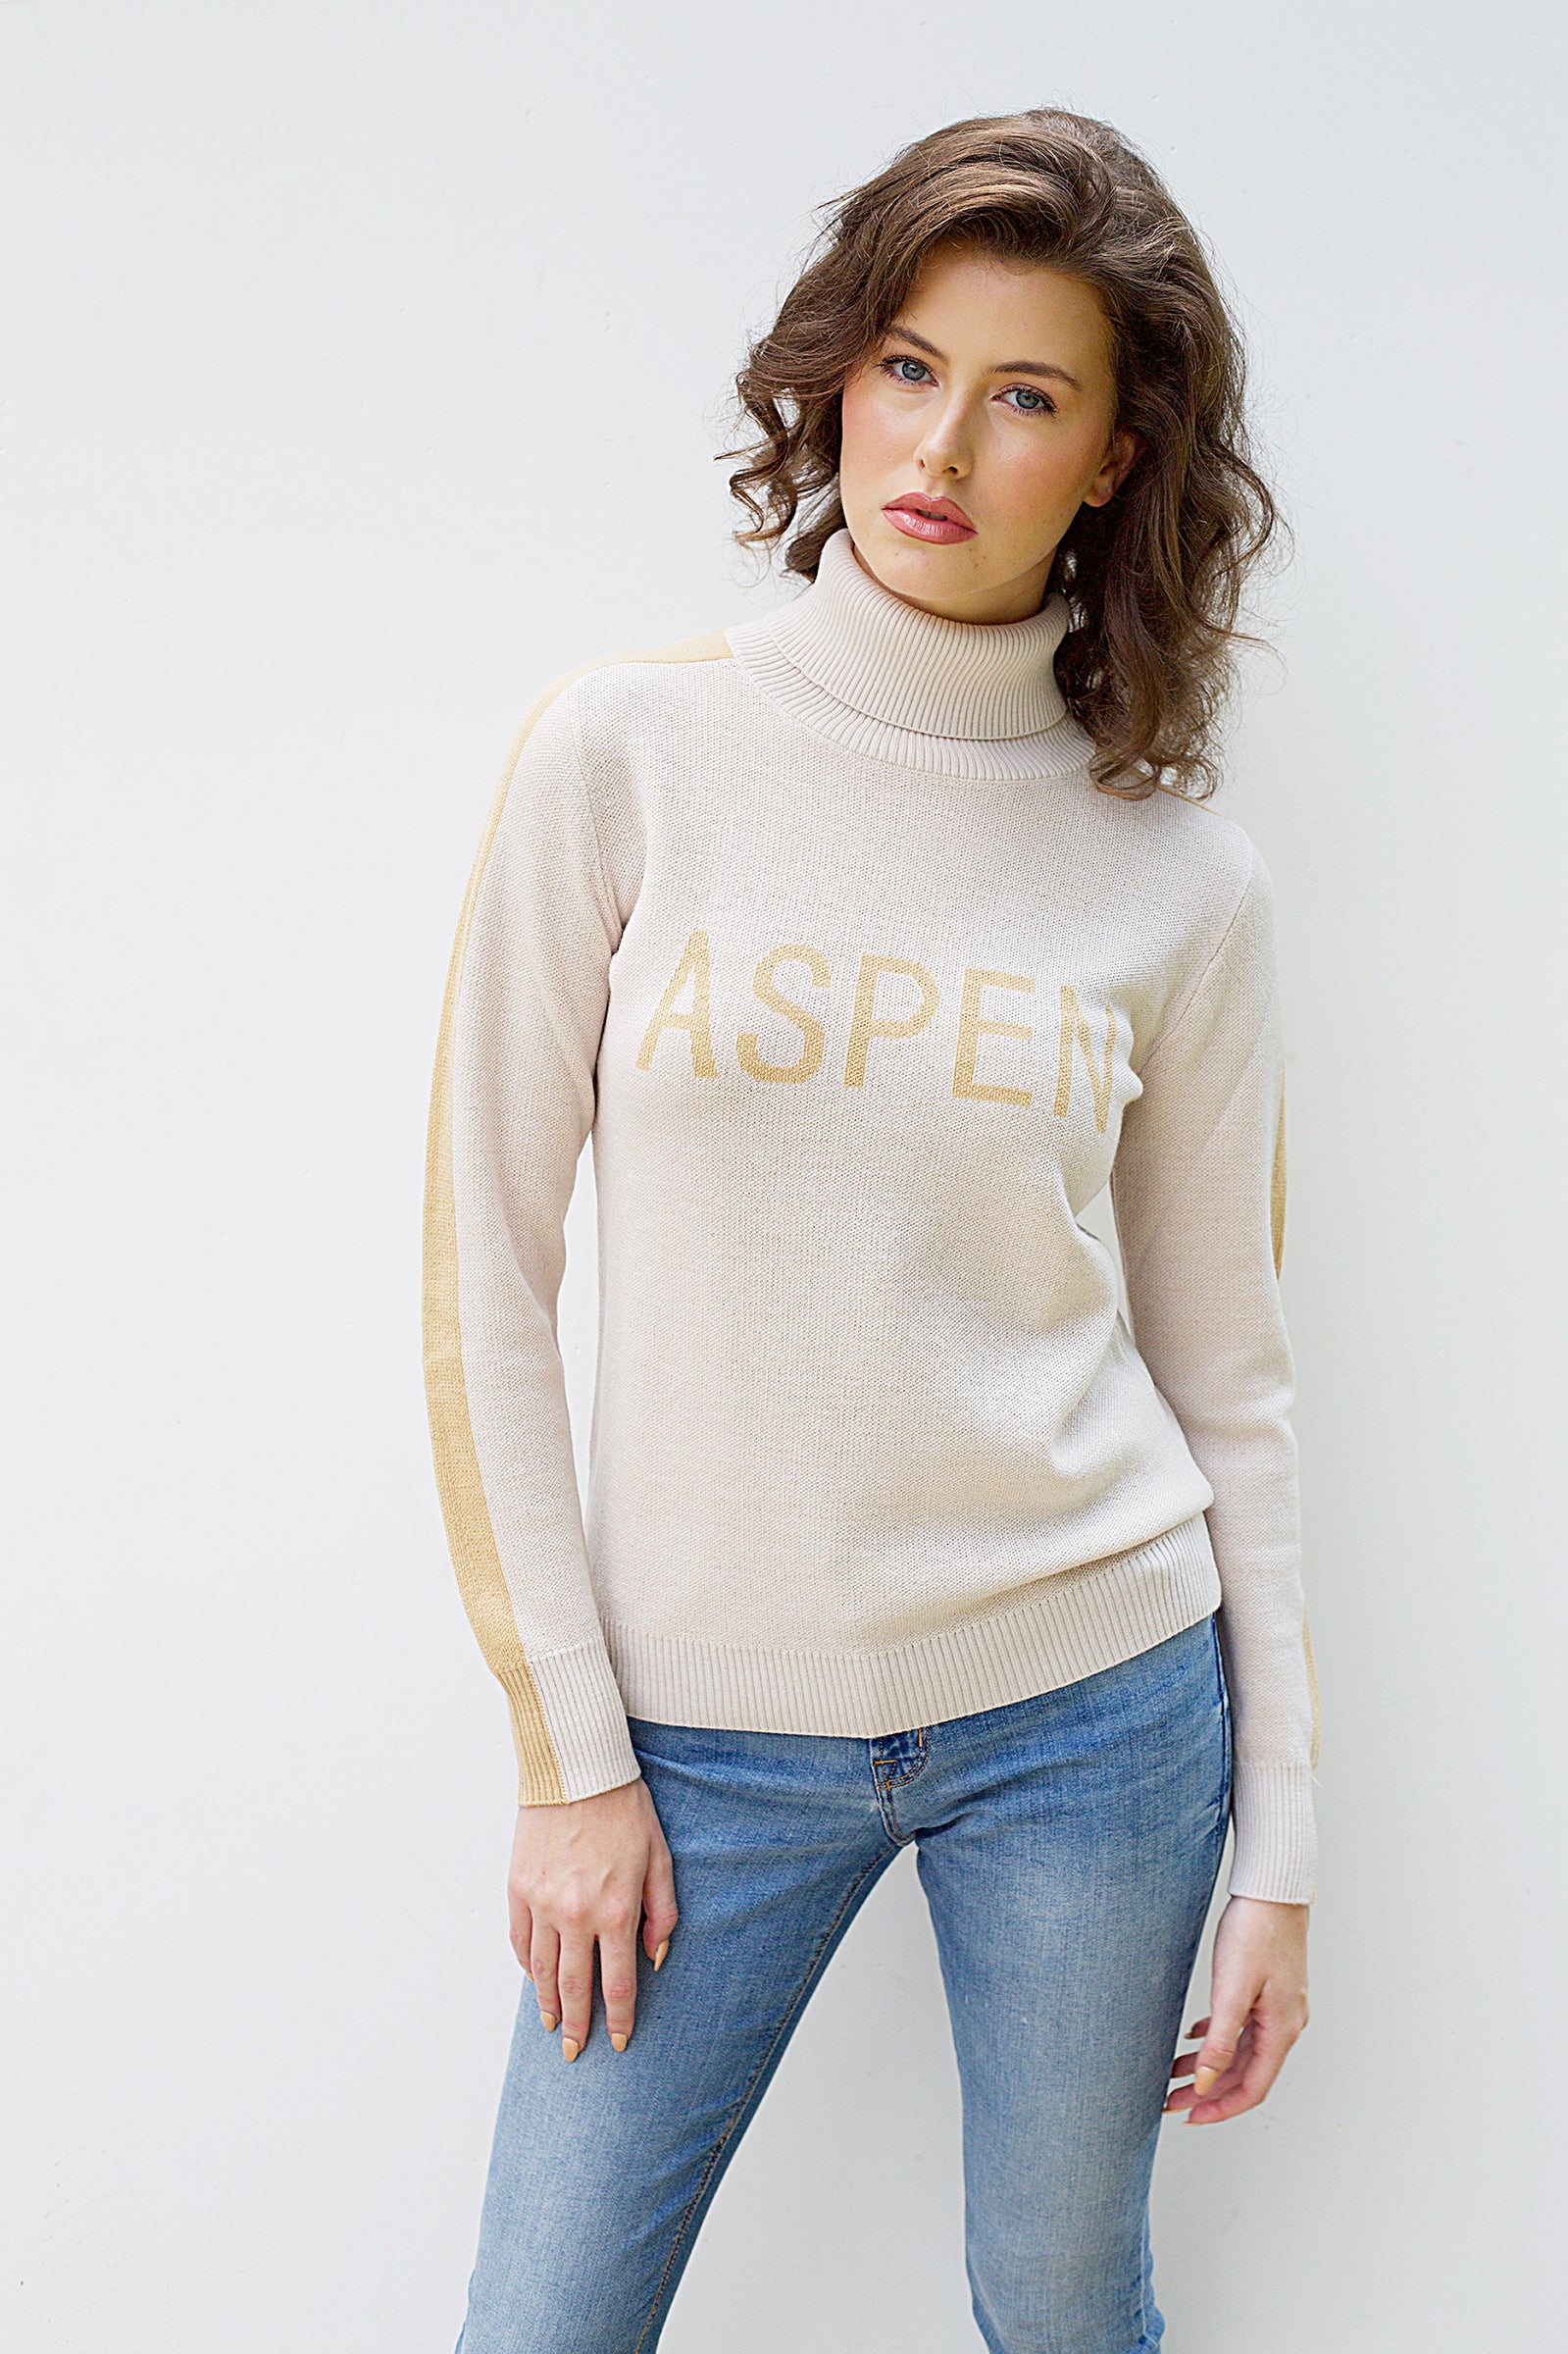 100% Italian Merino Wool Aspen Sweater Turtleneck Long Sleeve Warm Soft Knitted Pullover